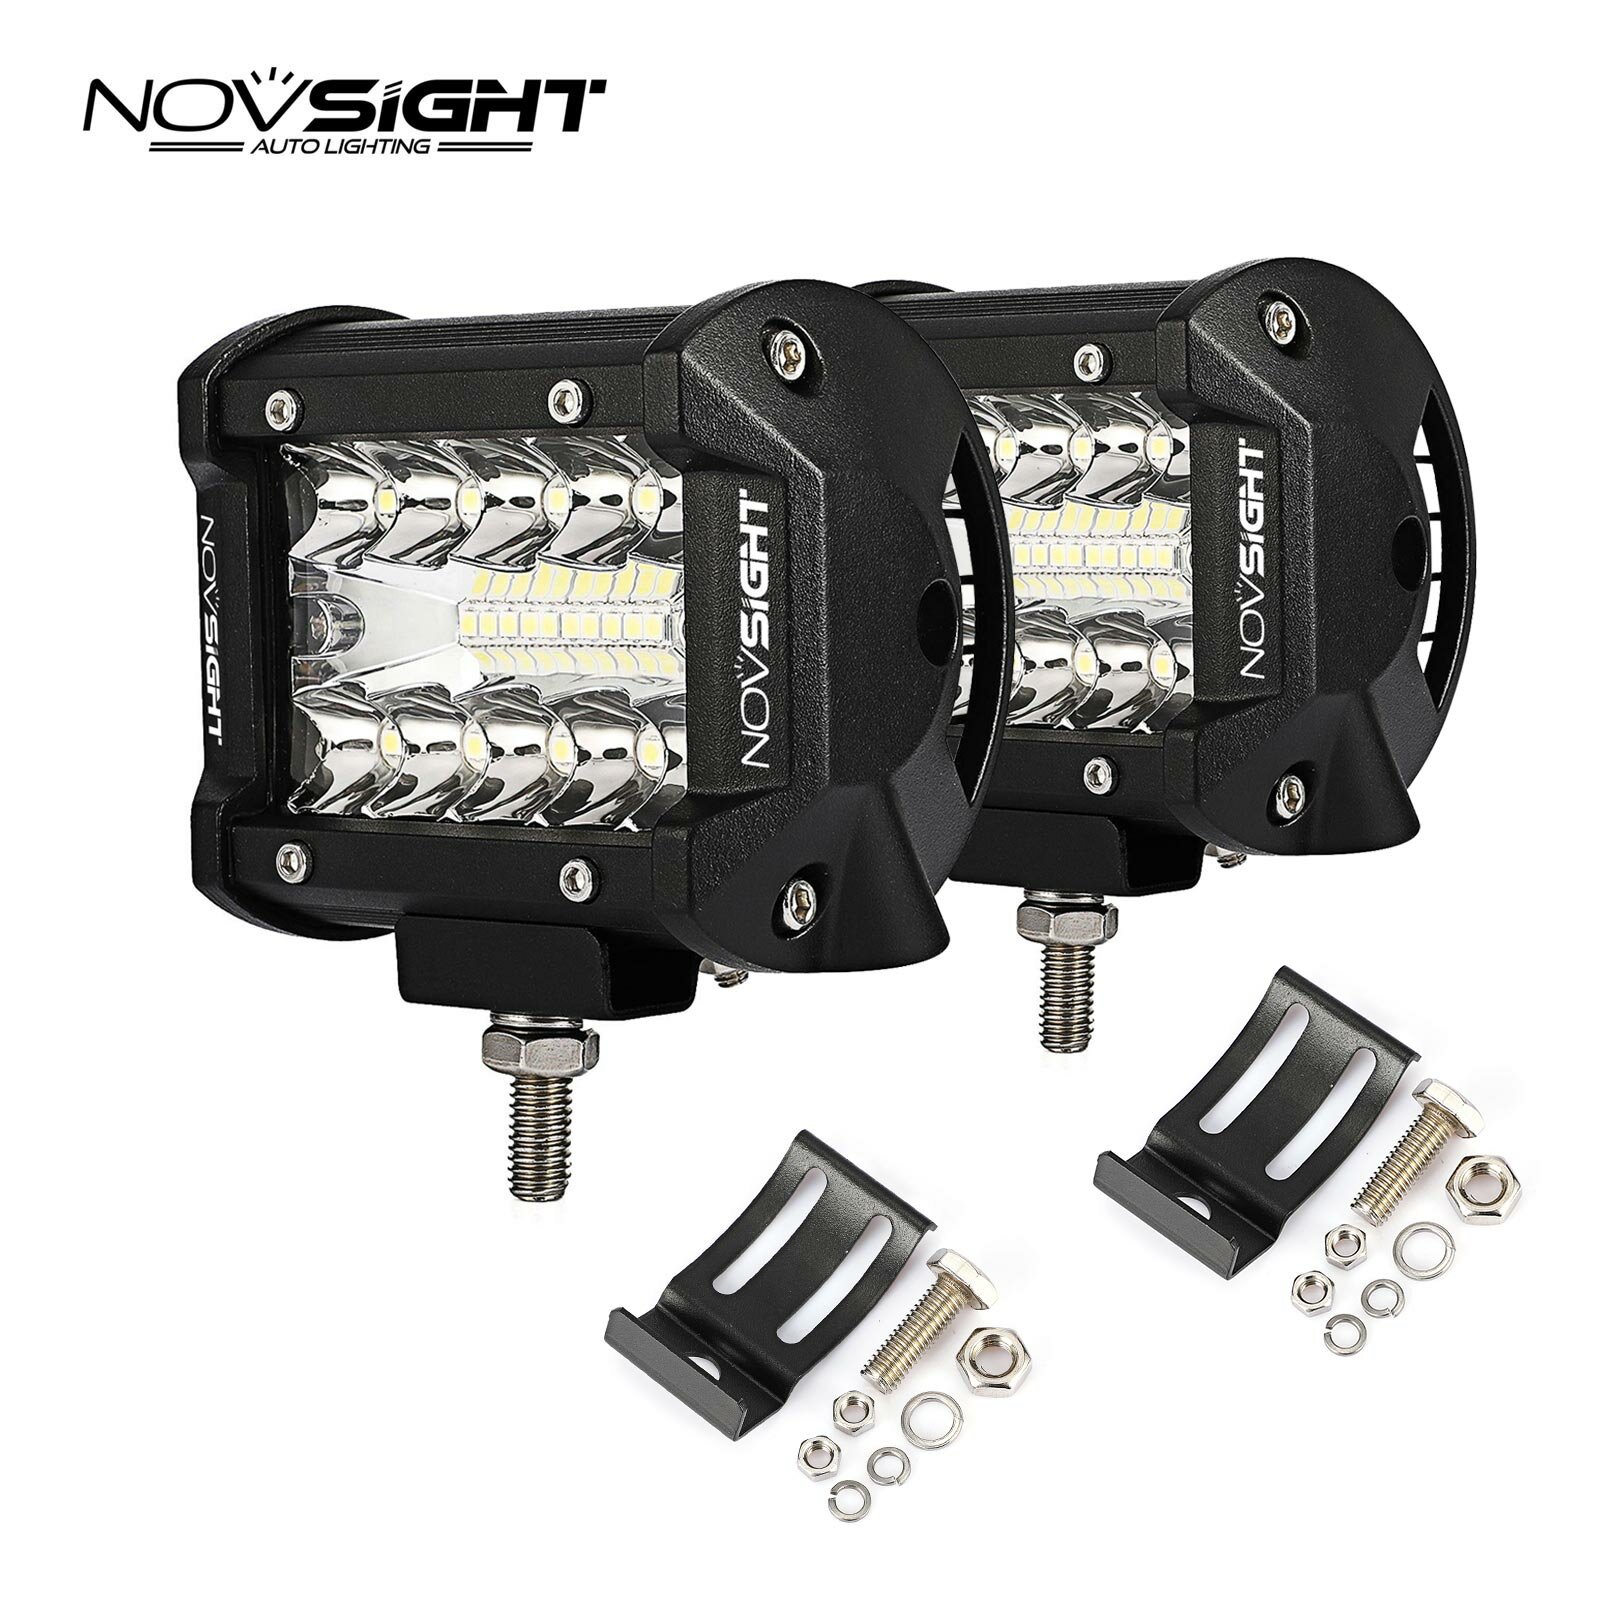 

NOVSIGHT 2PCS 4inch 60W LED Work Light Bar 3 Row Spot Lamp IP68 Waterproof For ATV UTV SUV Off Road